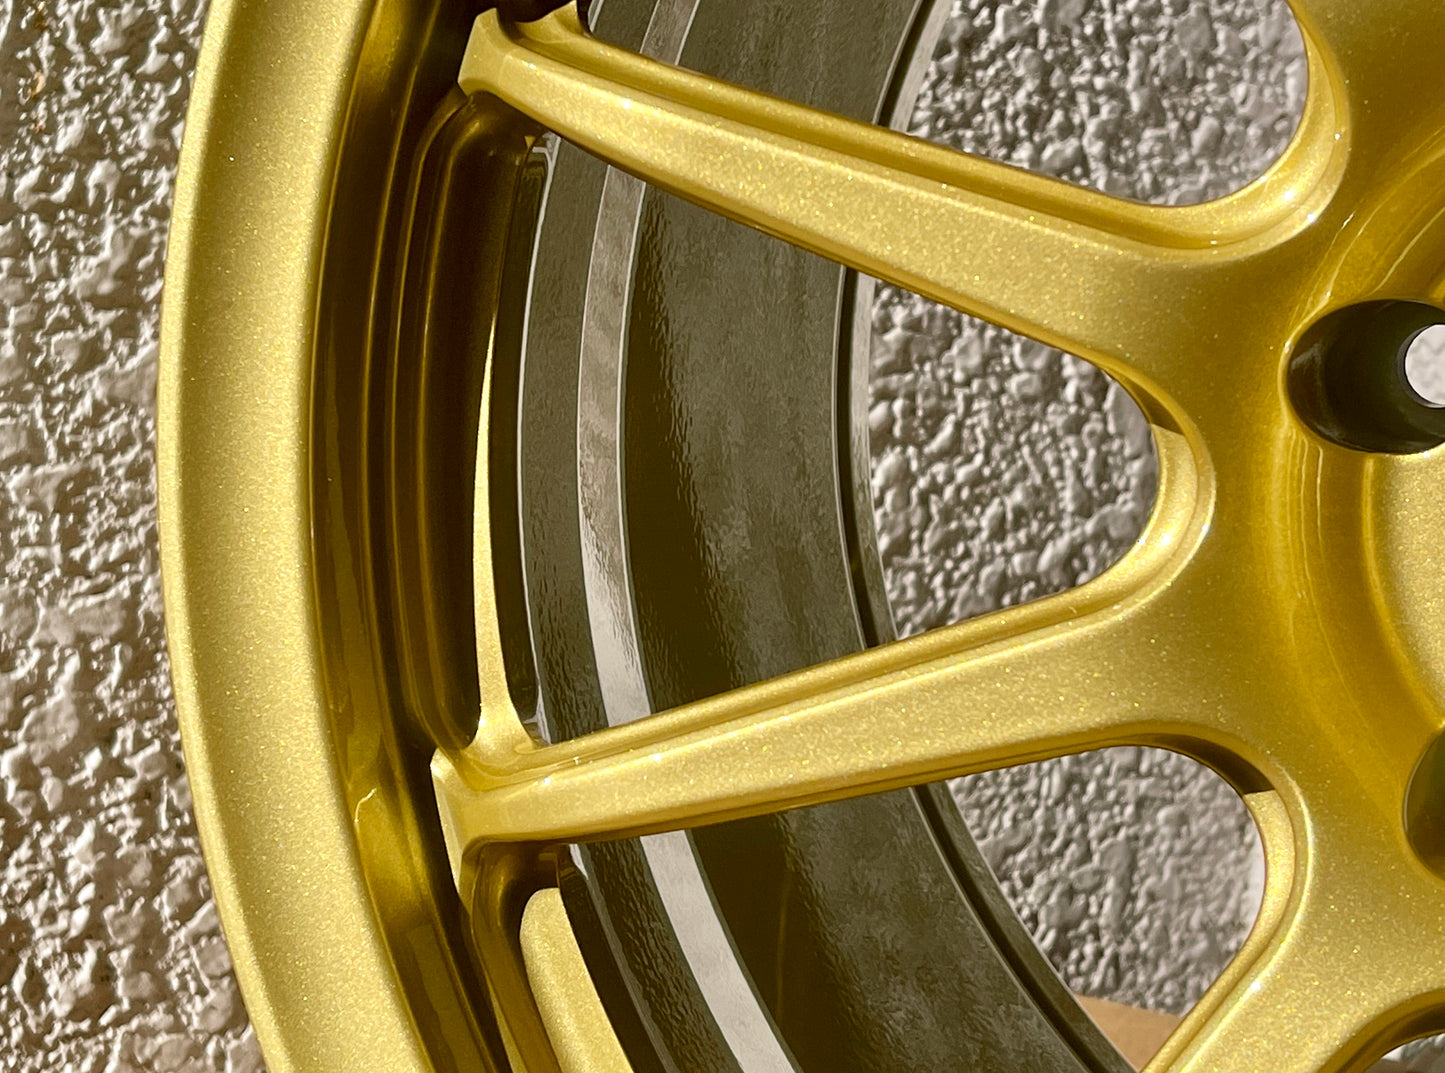 Lotus Exige V6 Forged Wheels Gold